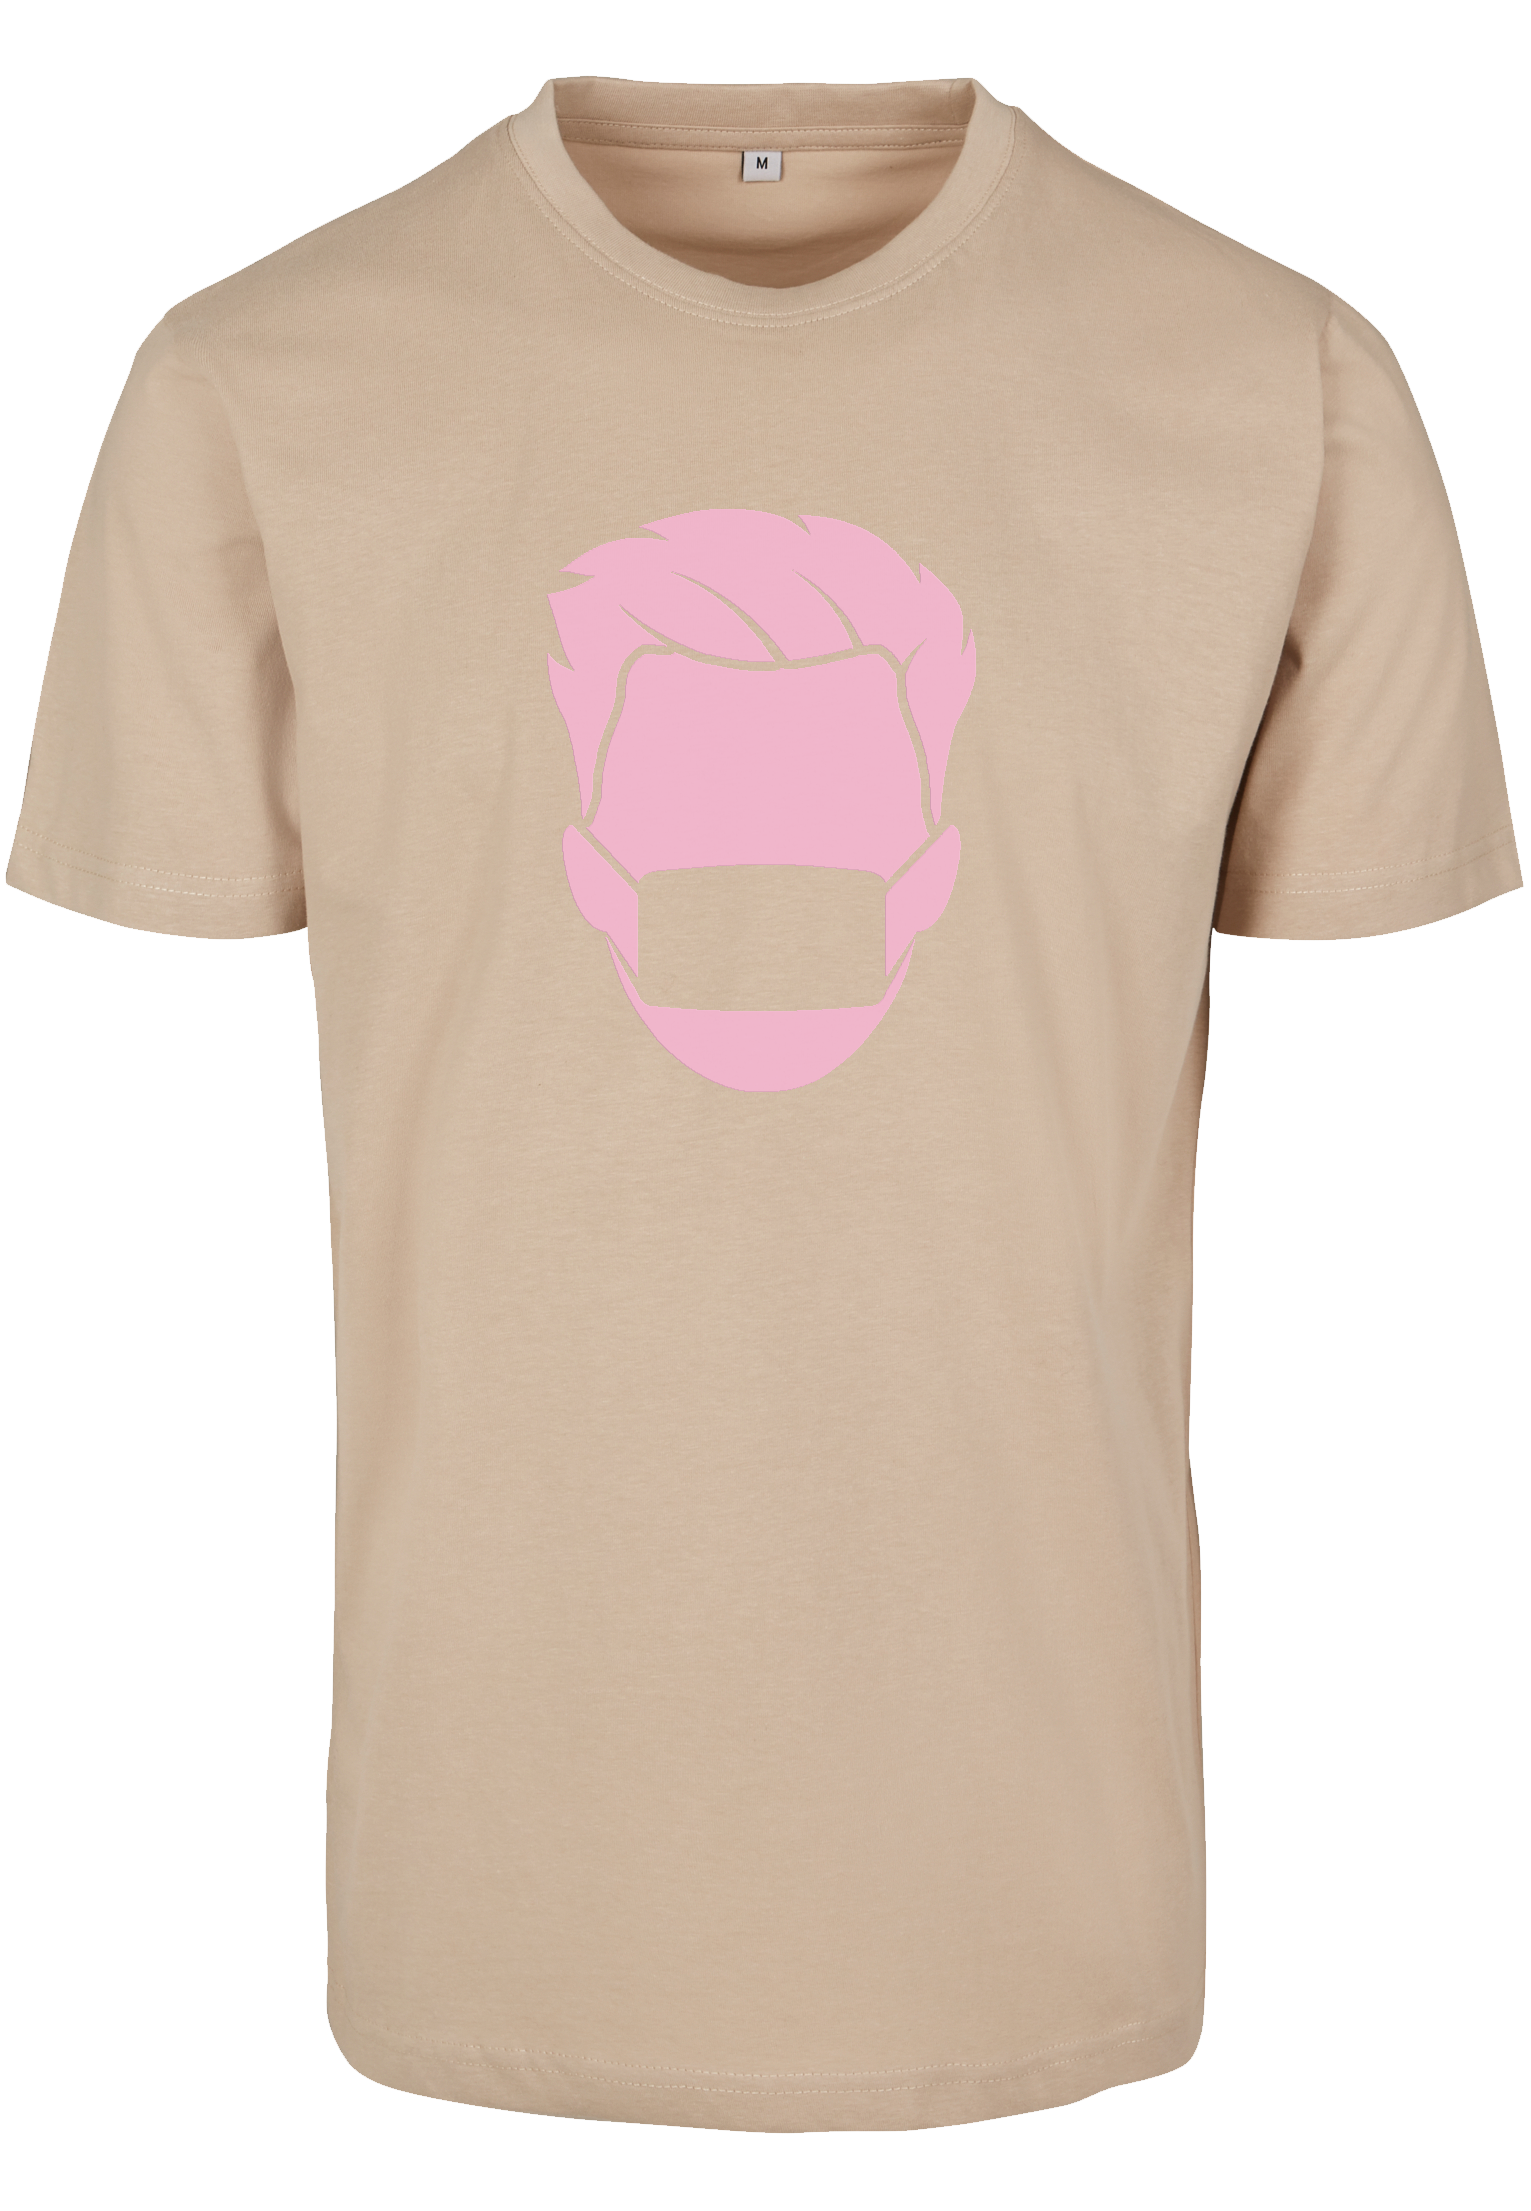 Pinkcoly sand T-Shirt